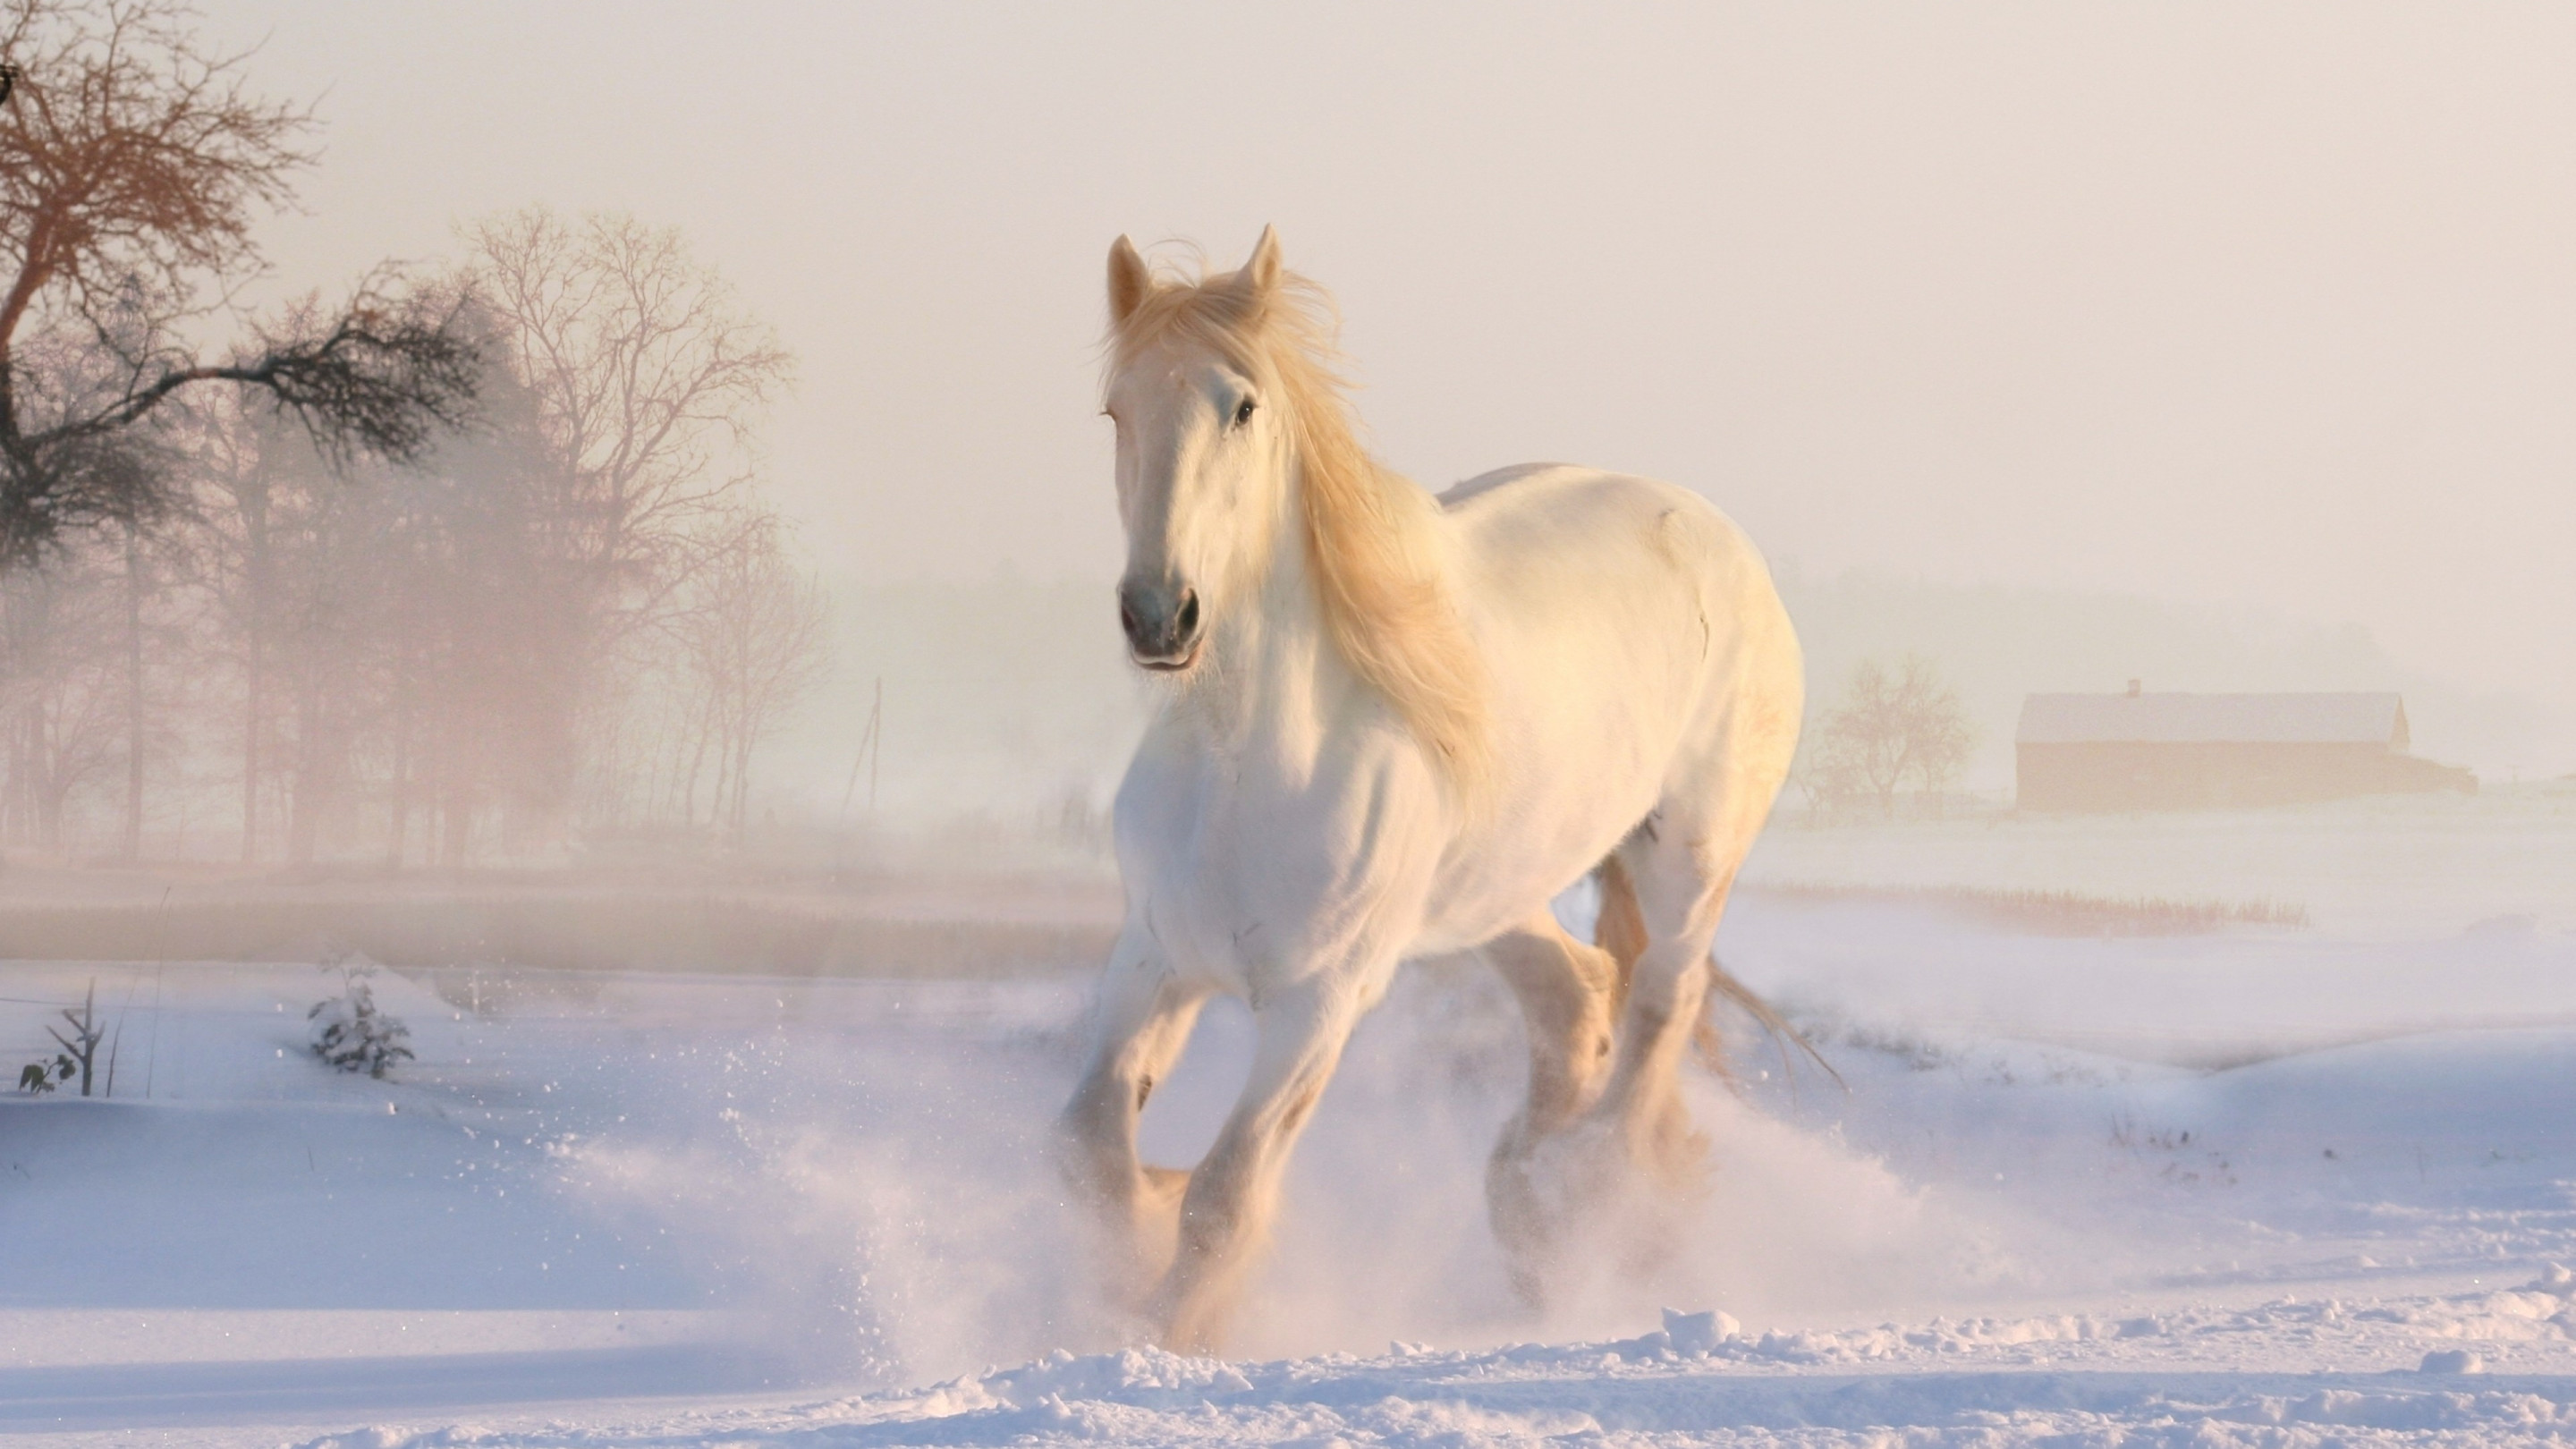 White horse running through snow wallpaper 2880x1620